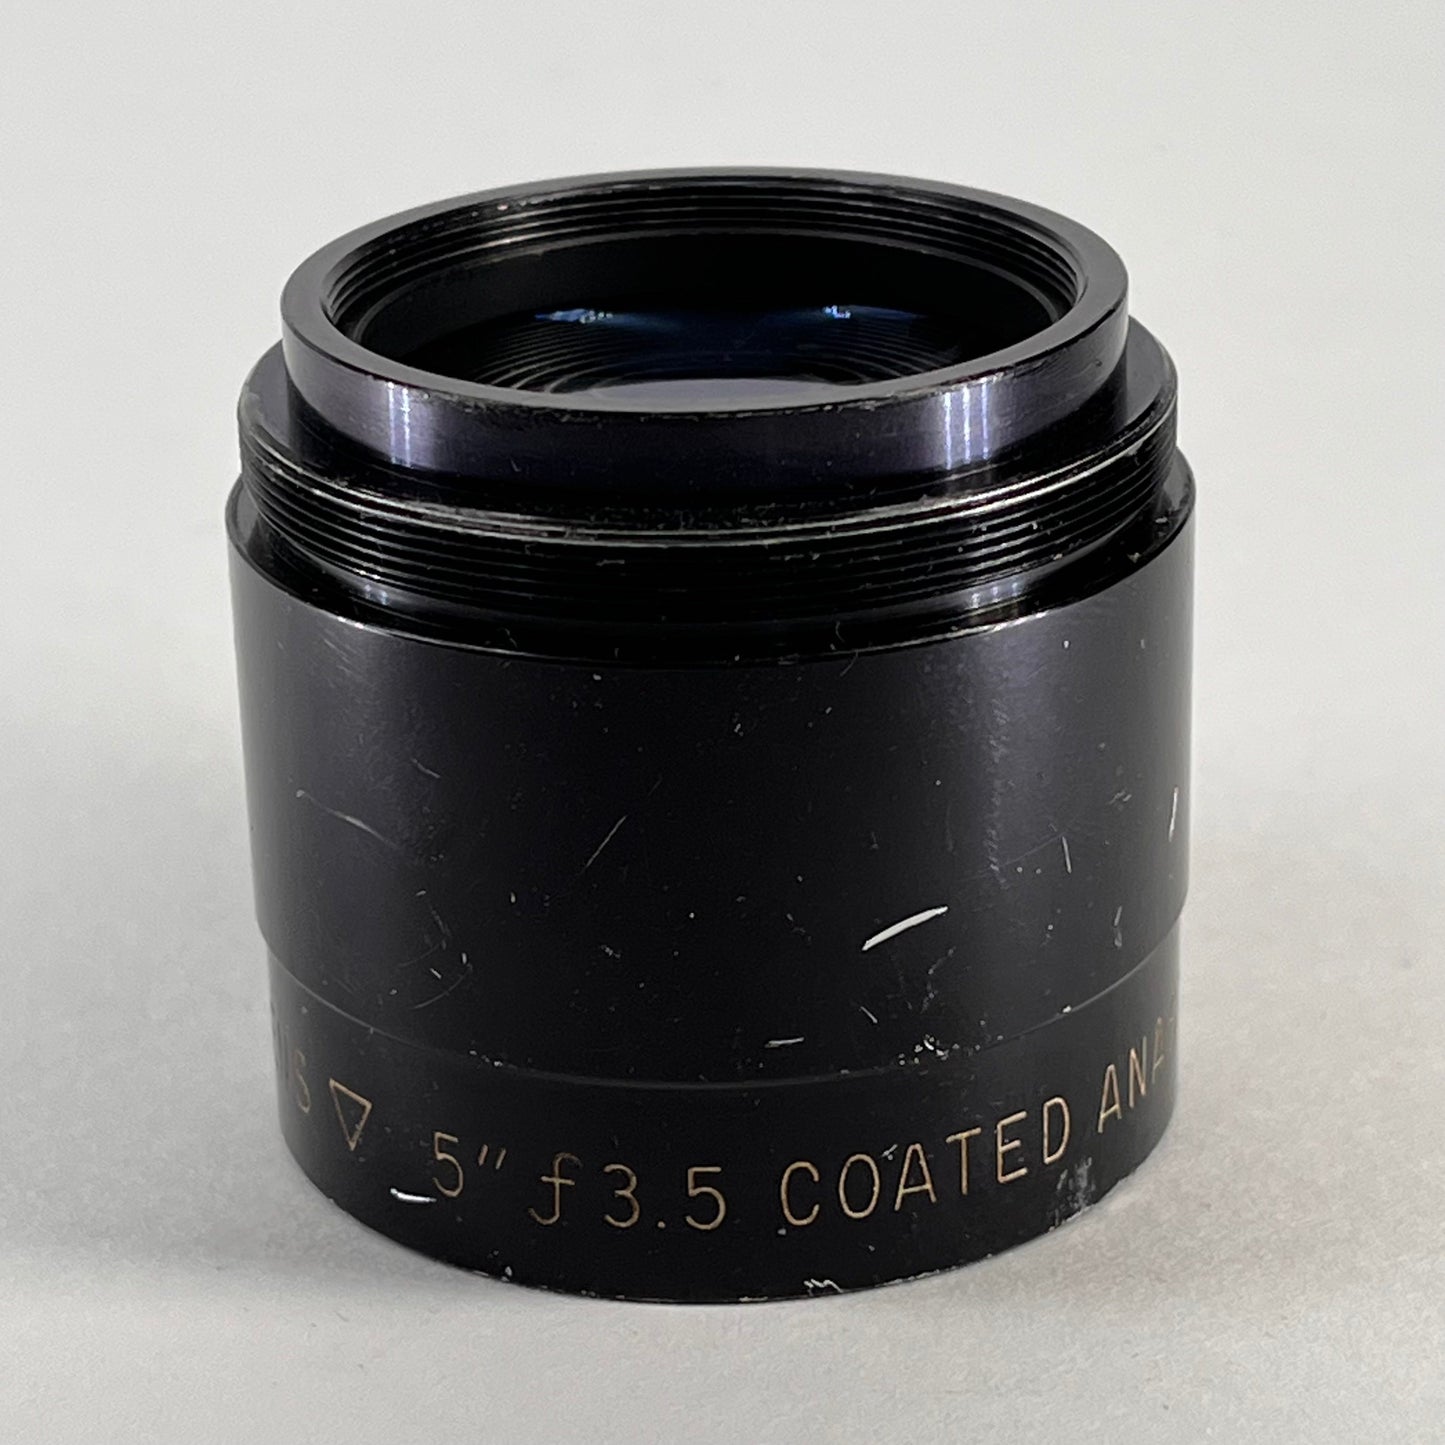 TDC TRIDAR 5" f 3.5  projection lens